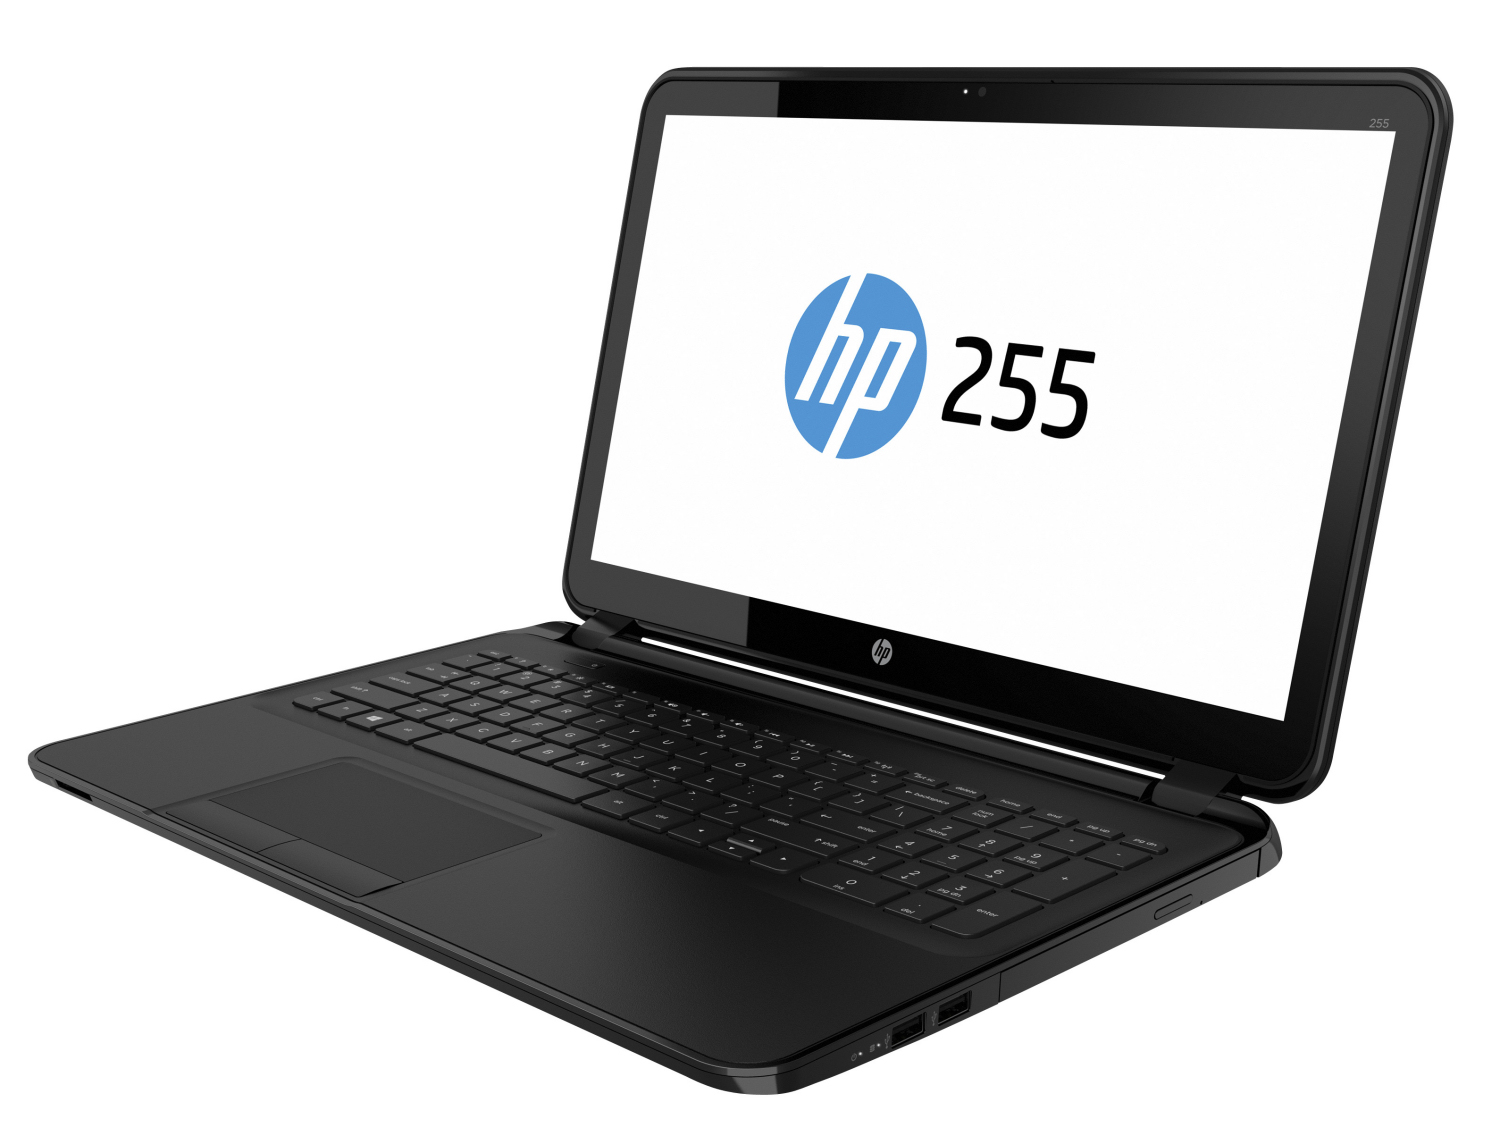 HP 250 255 G2 UK Laptop Keyboard Black **One Key Only** 32H8400600